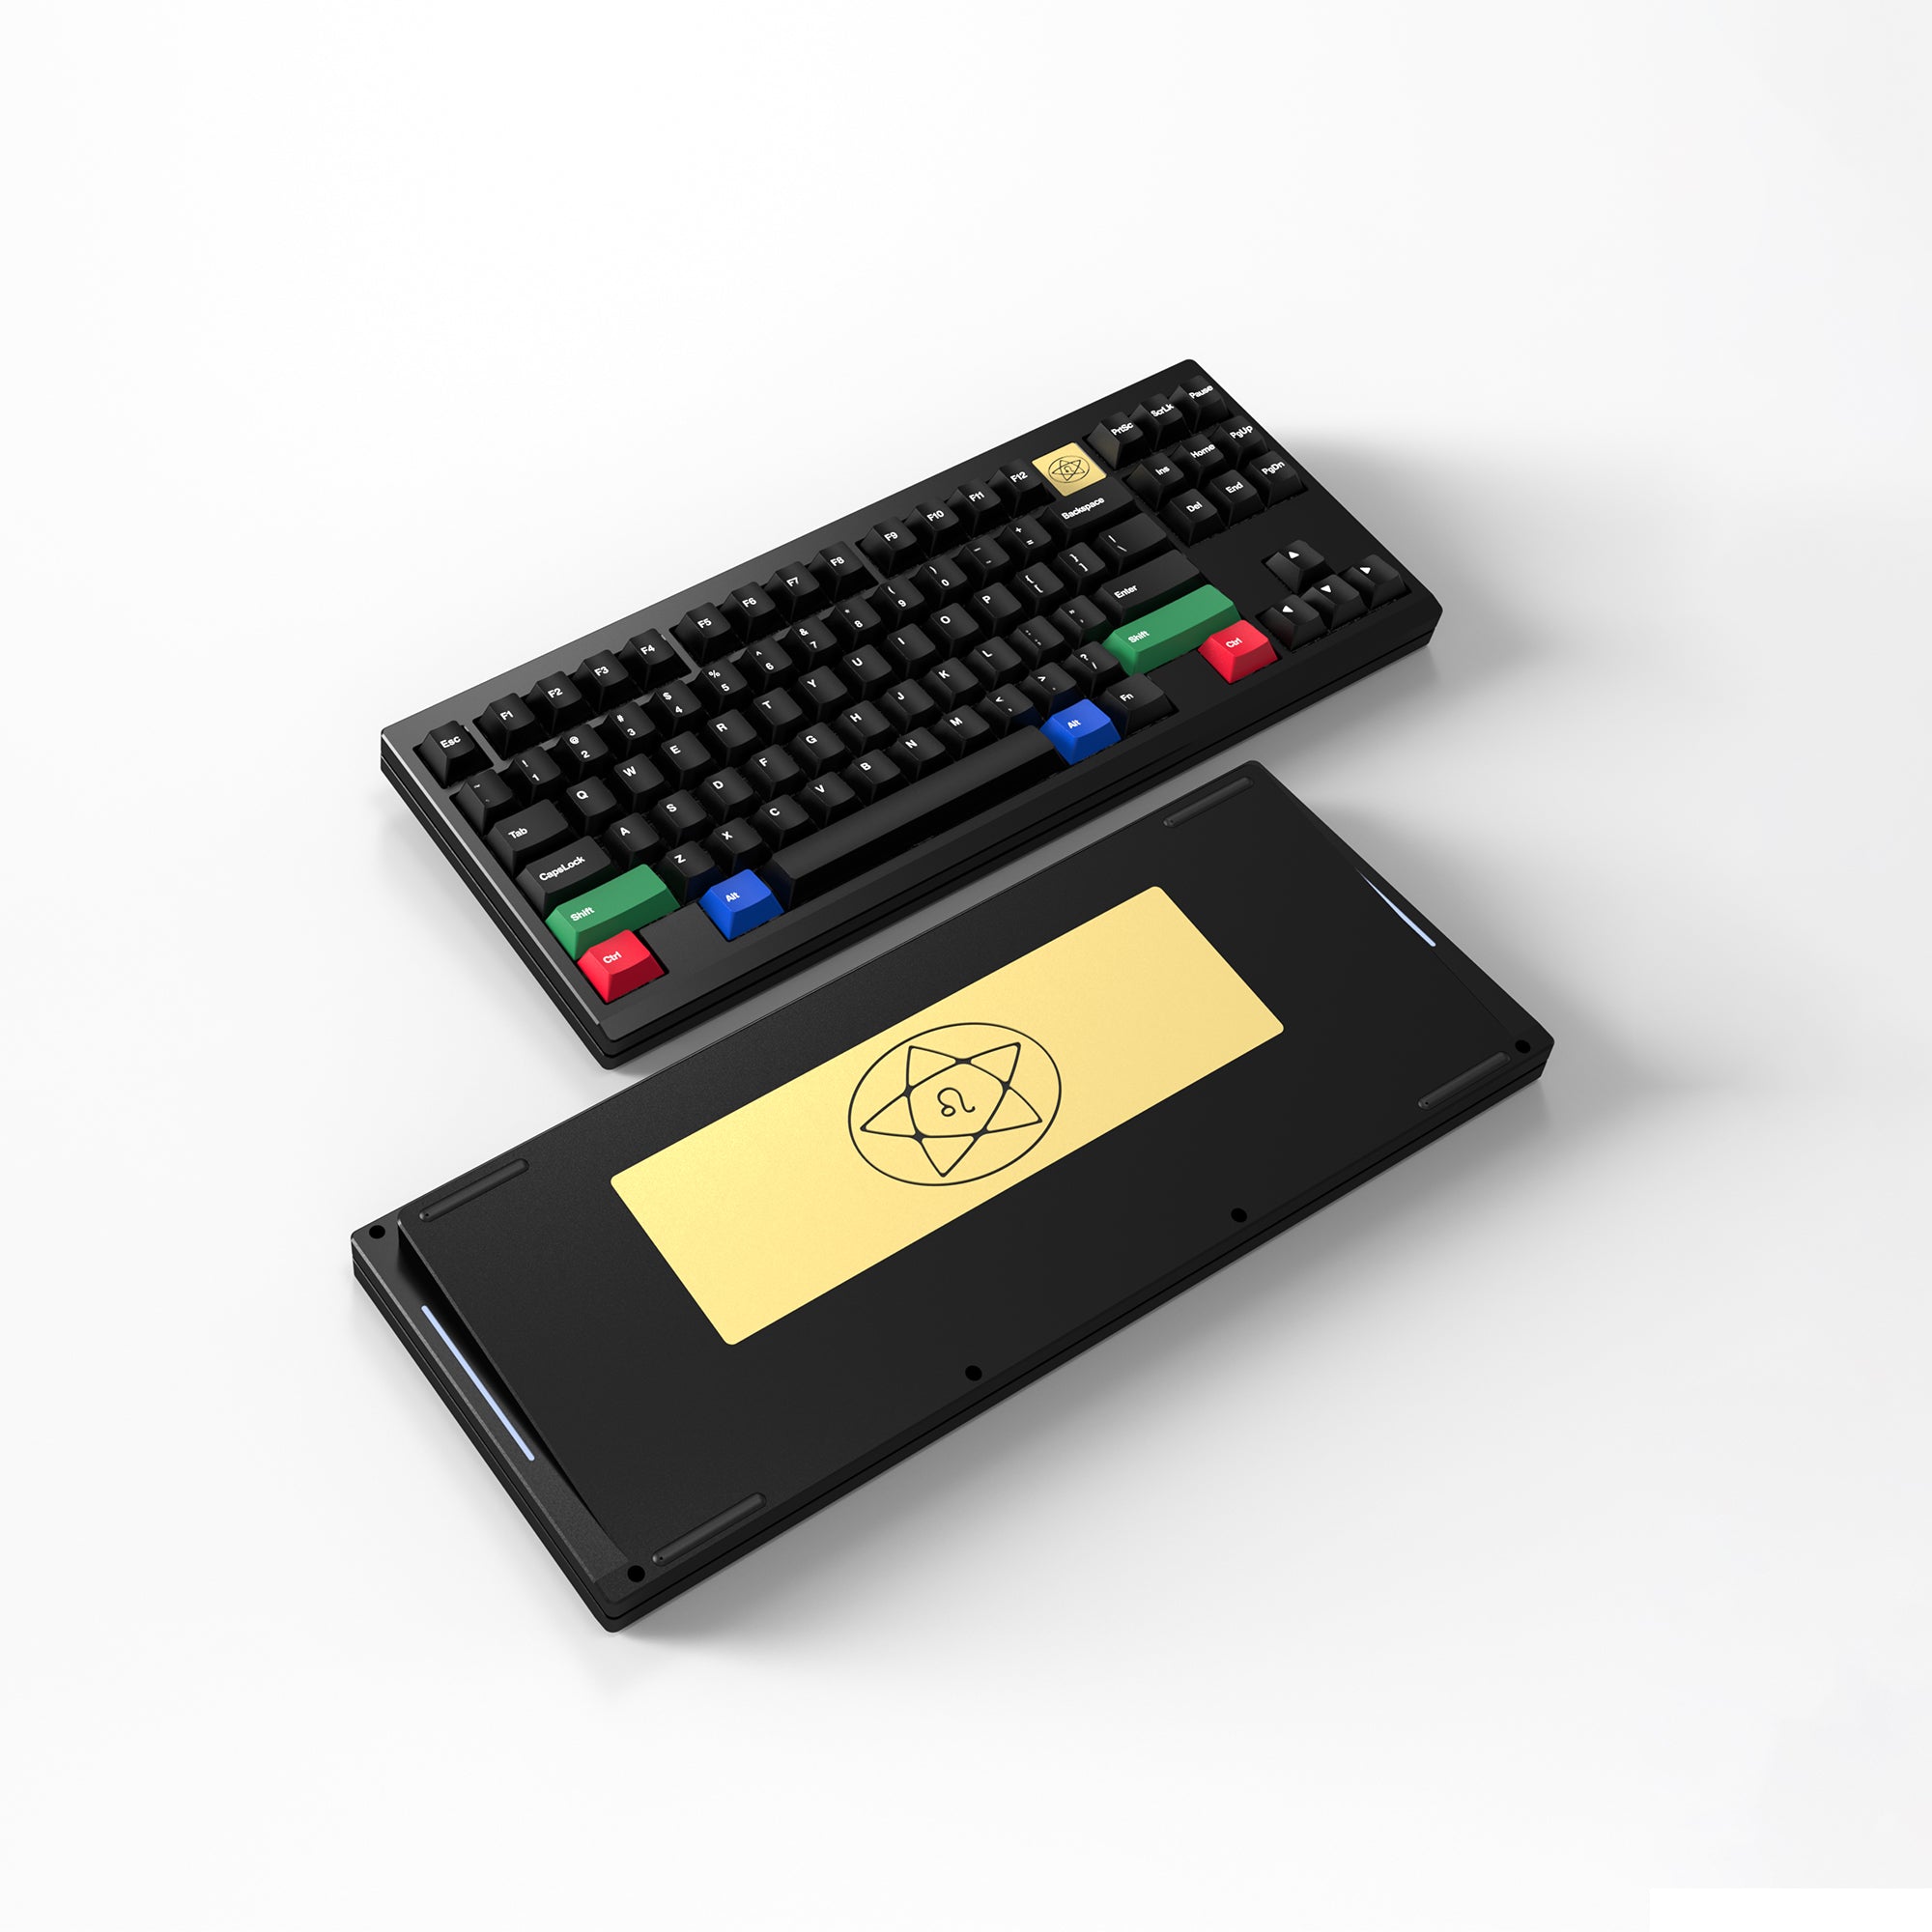 Leo80 Mechanical Keyboard Kit - Swift, Value, Quality, Fox Design